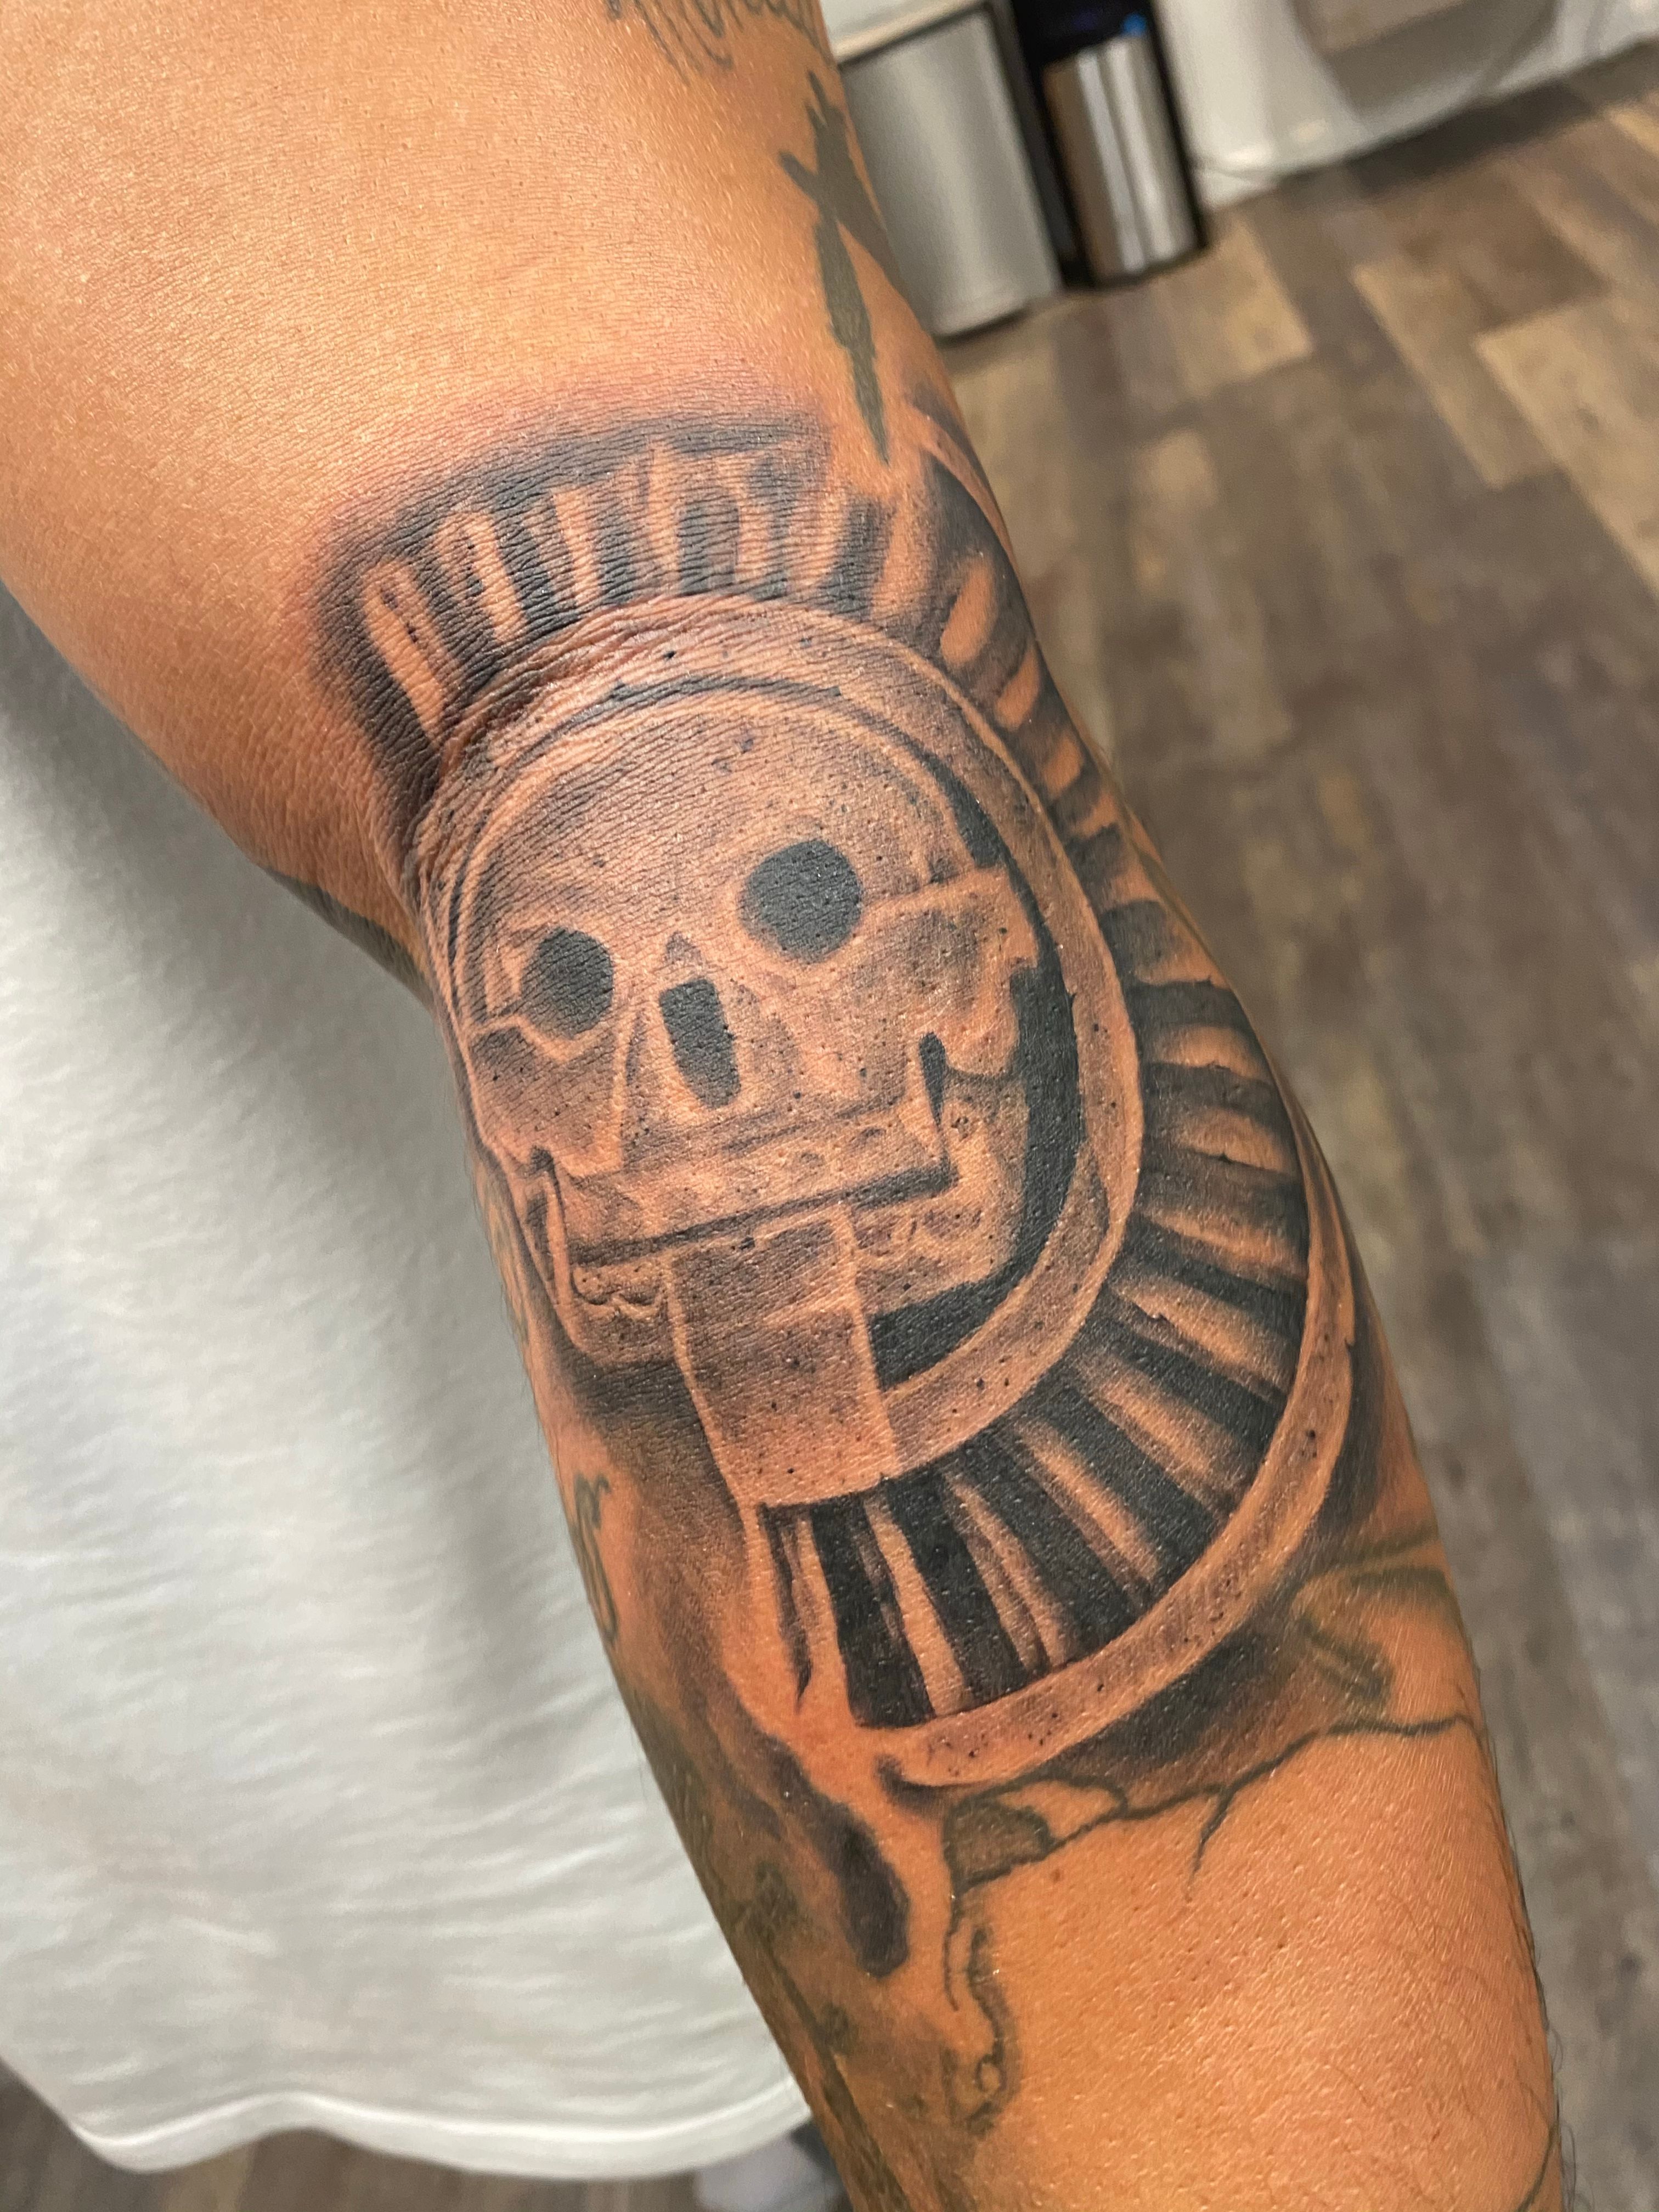 Aztec death tattoos